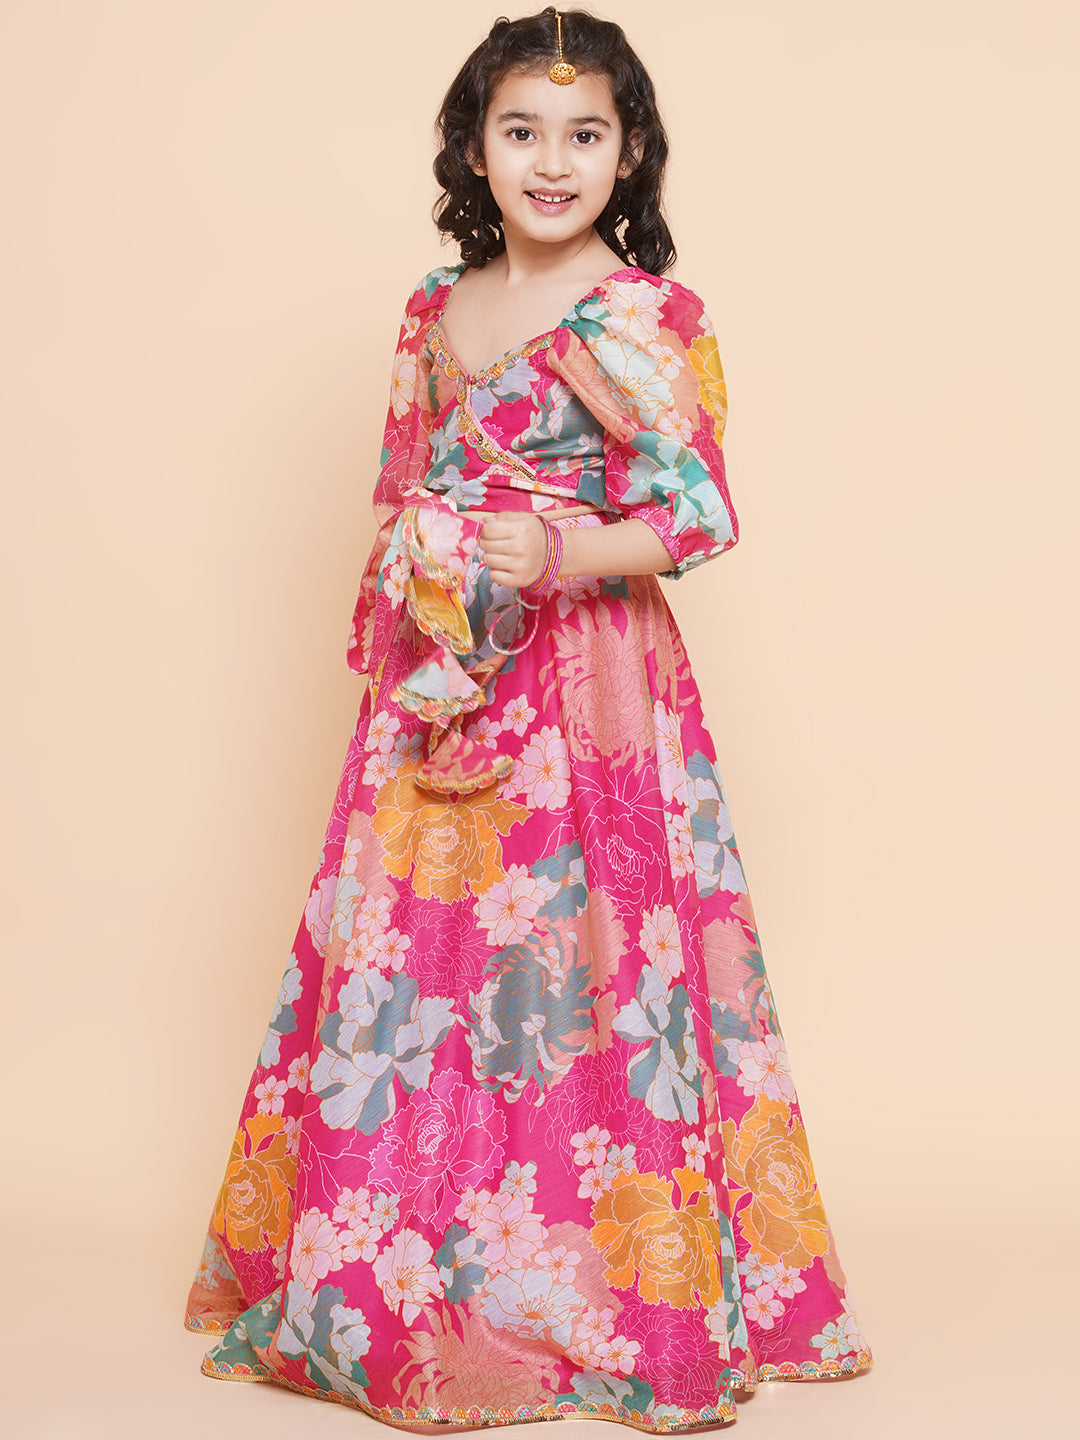 Bitiya By Bhama Girls Pink Flower Digital Multi Print Lace Work Choli With Ready To Wear Lehenga.